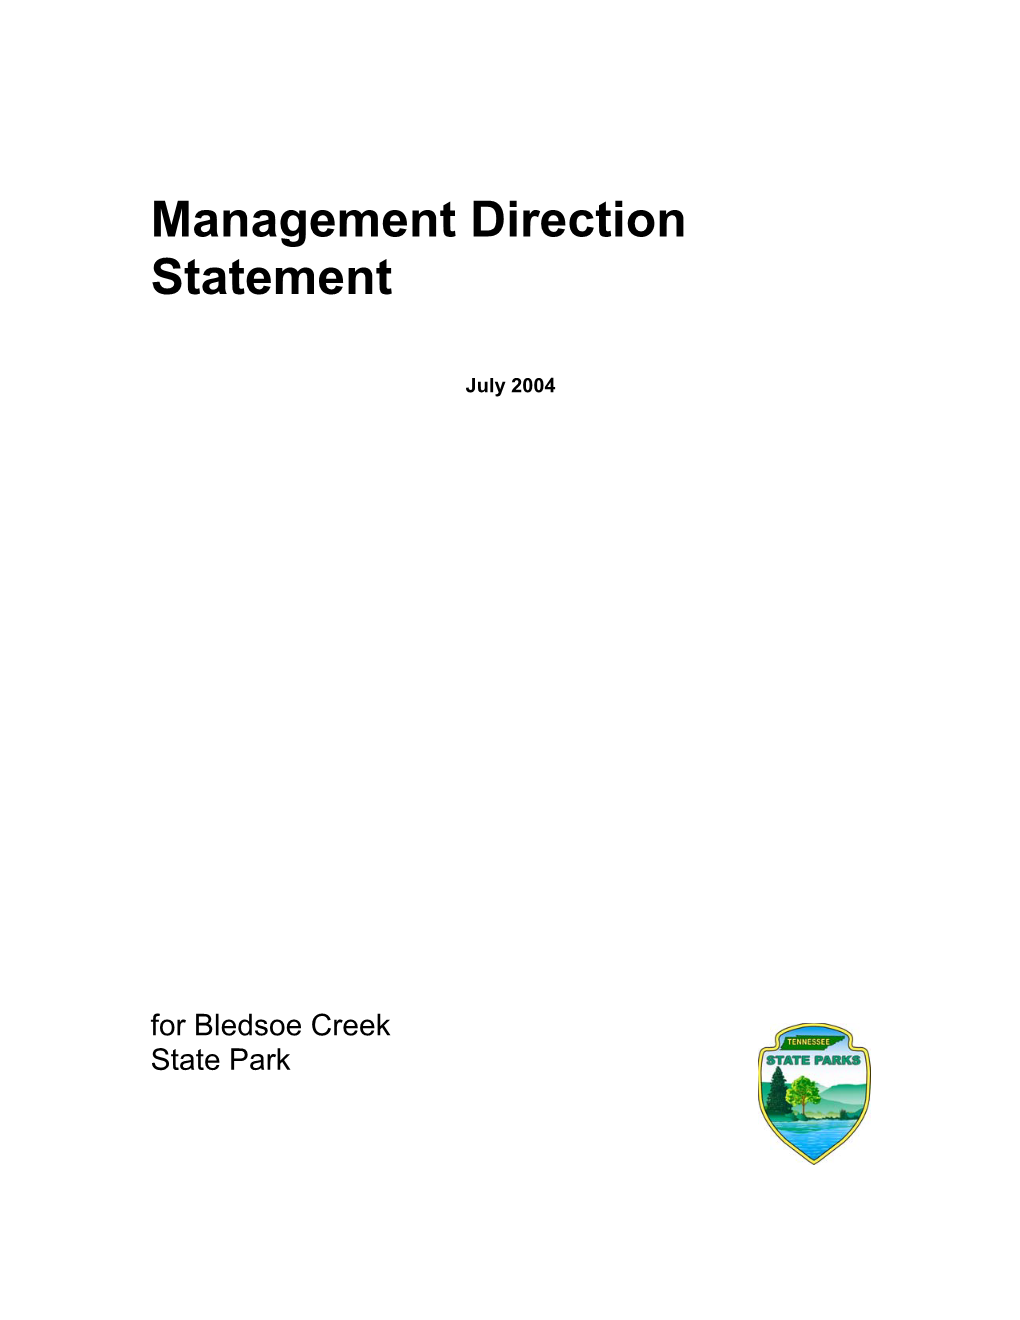 Bledsoe Creek State Park Management Direction Statement